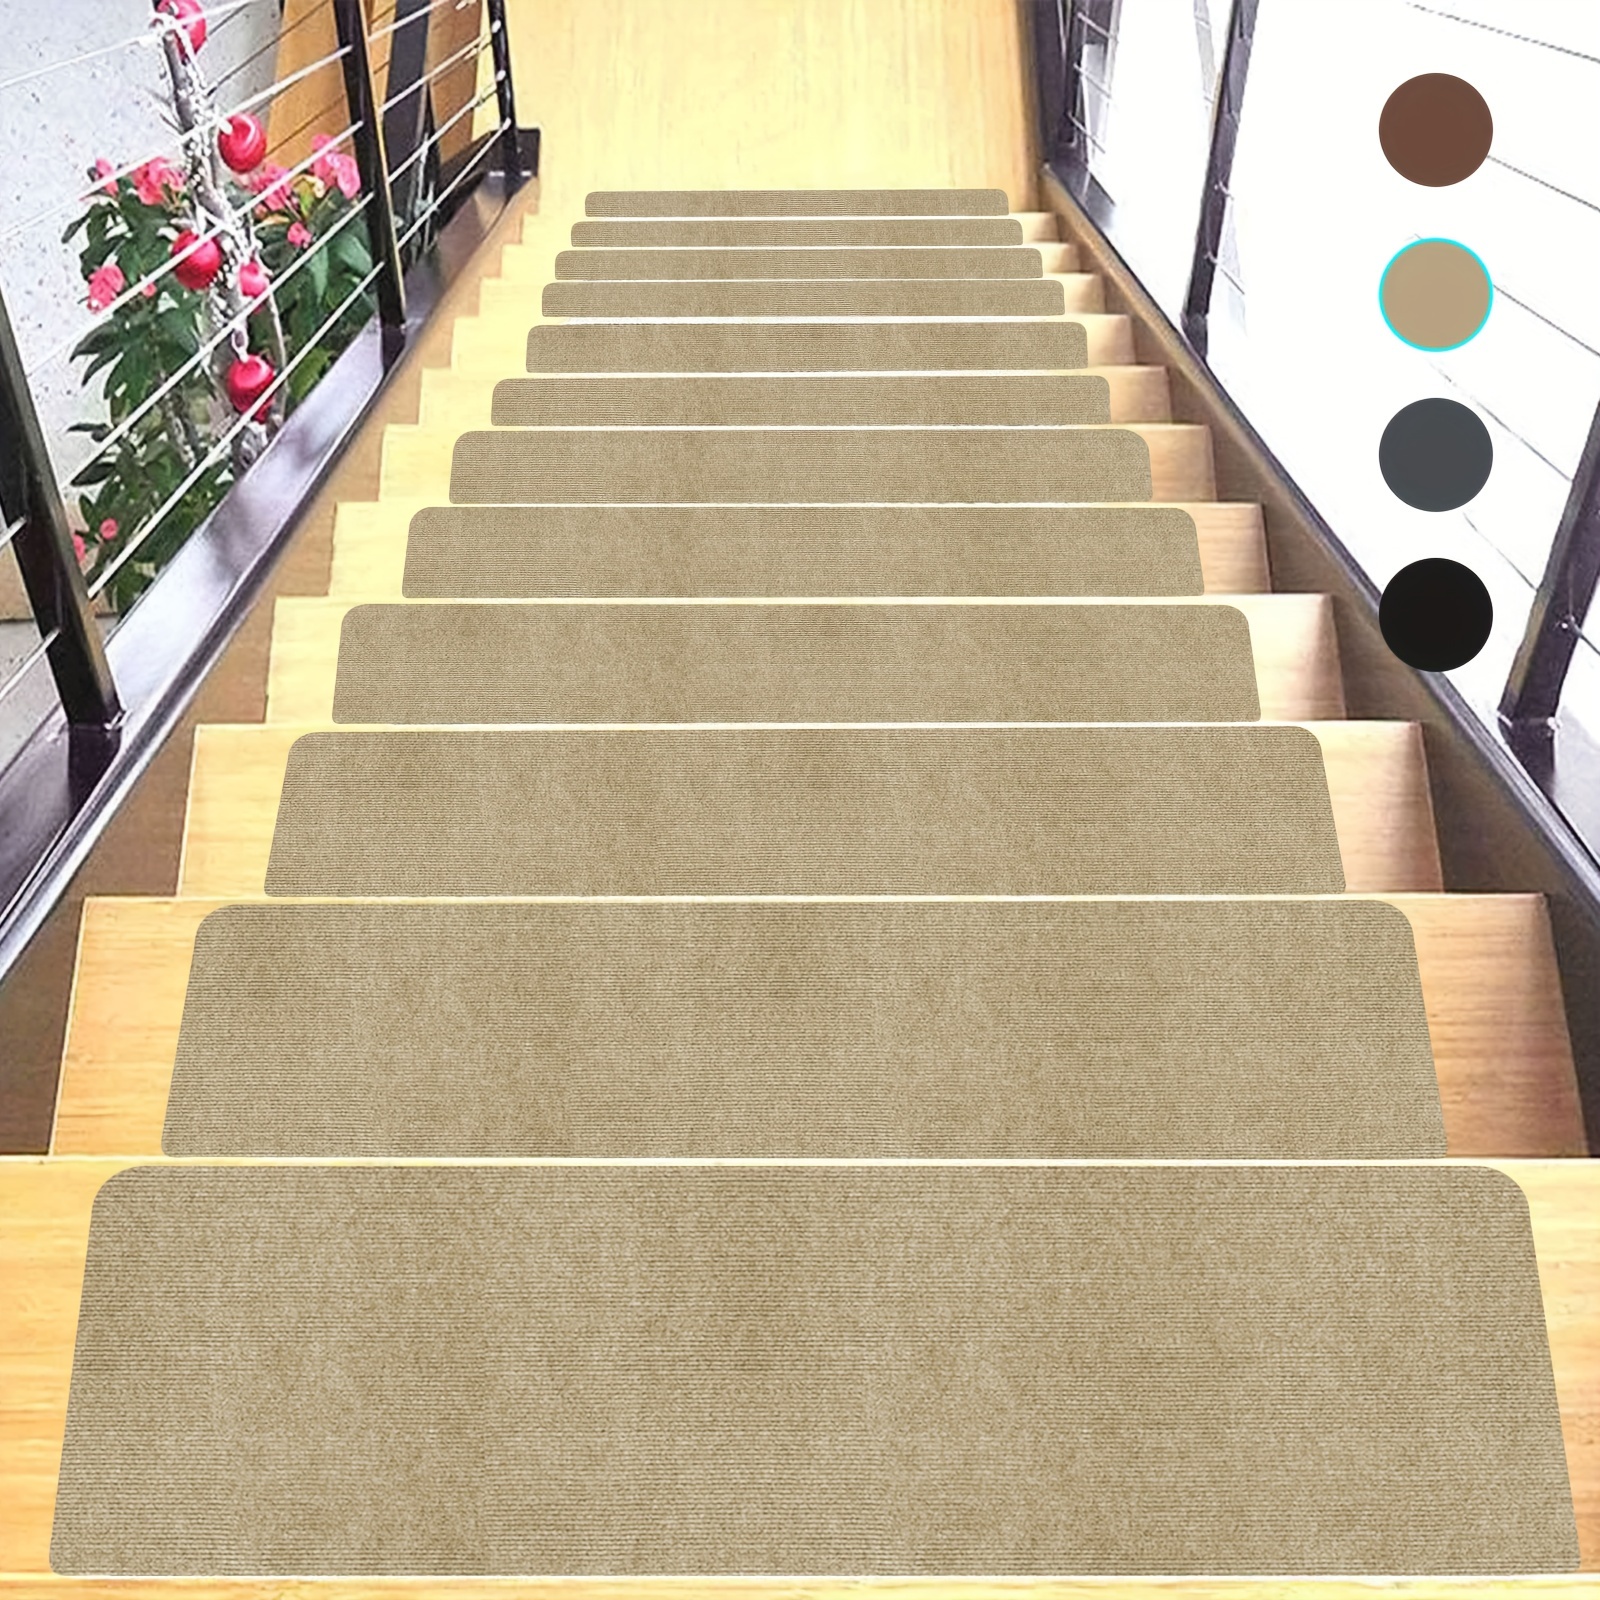  Alfombra de pasillo para pasillo de pasillo, 3.3 ft, 59.1 in,  98.4 in, 118.1 in, 11.5 ft, 13.1 ft, 16.4 ft, 19.7 ft, cocina, pasillo,  escaleras, alfombra antideslizante, lavable, color beige (tamaño : Hogar y  Cocina